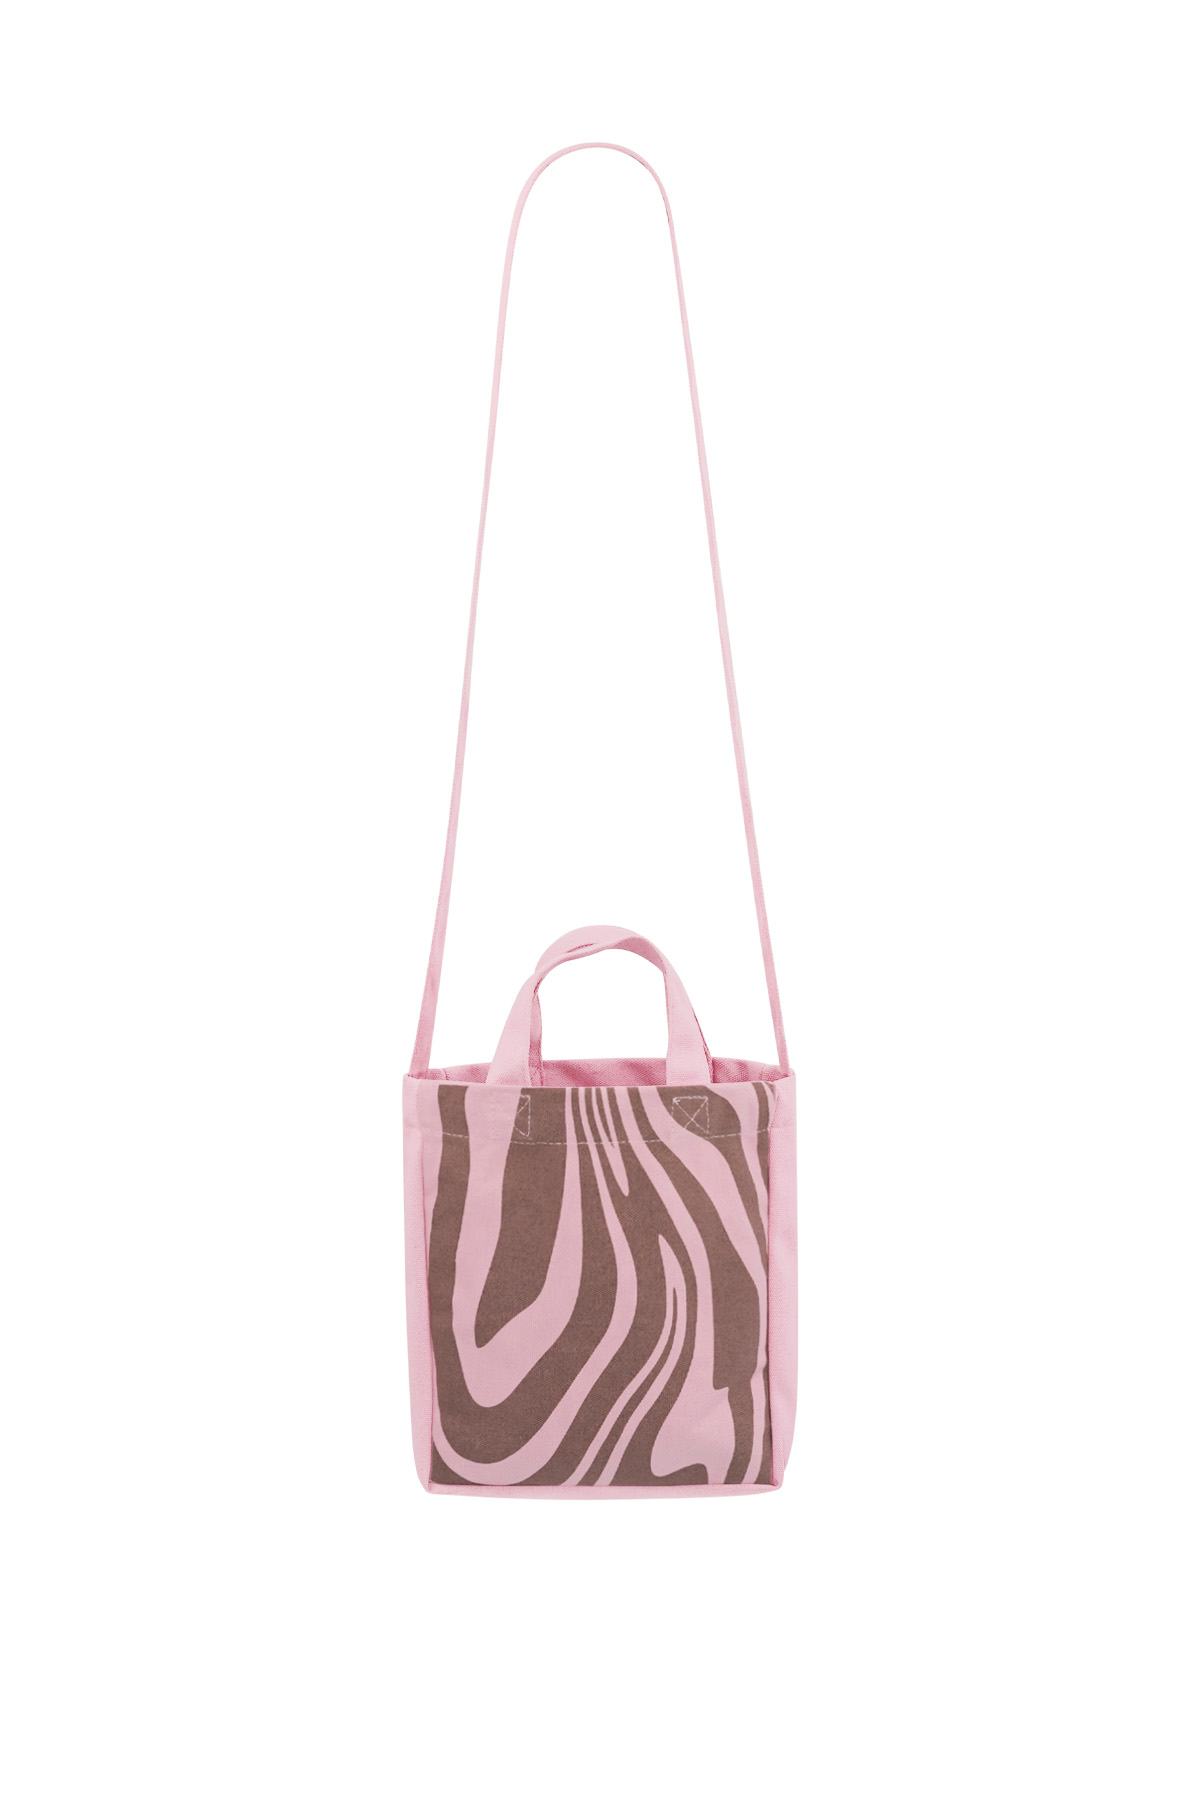 Küçük kanvas çanta zebra - pembe kahverengi Resim4